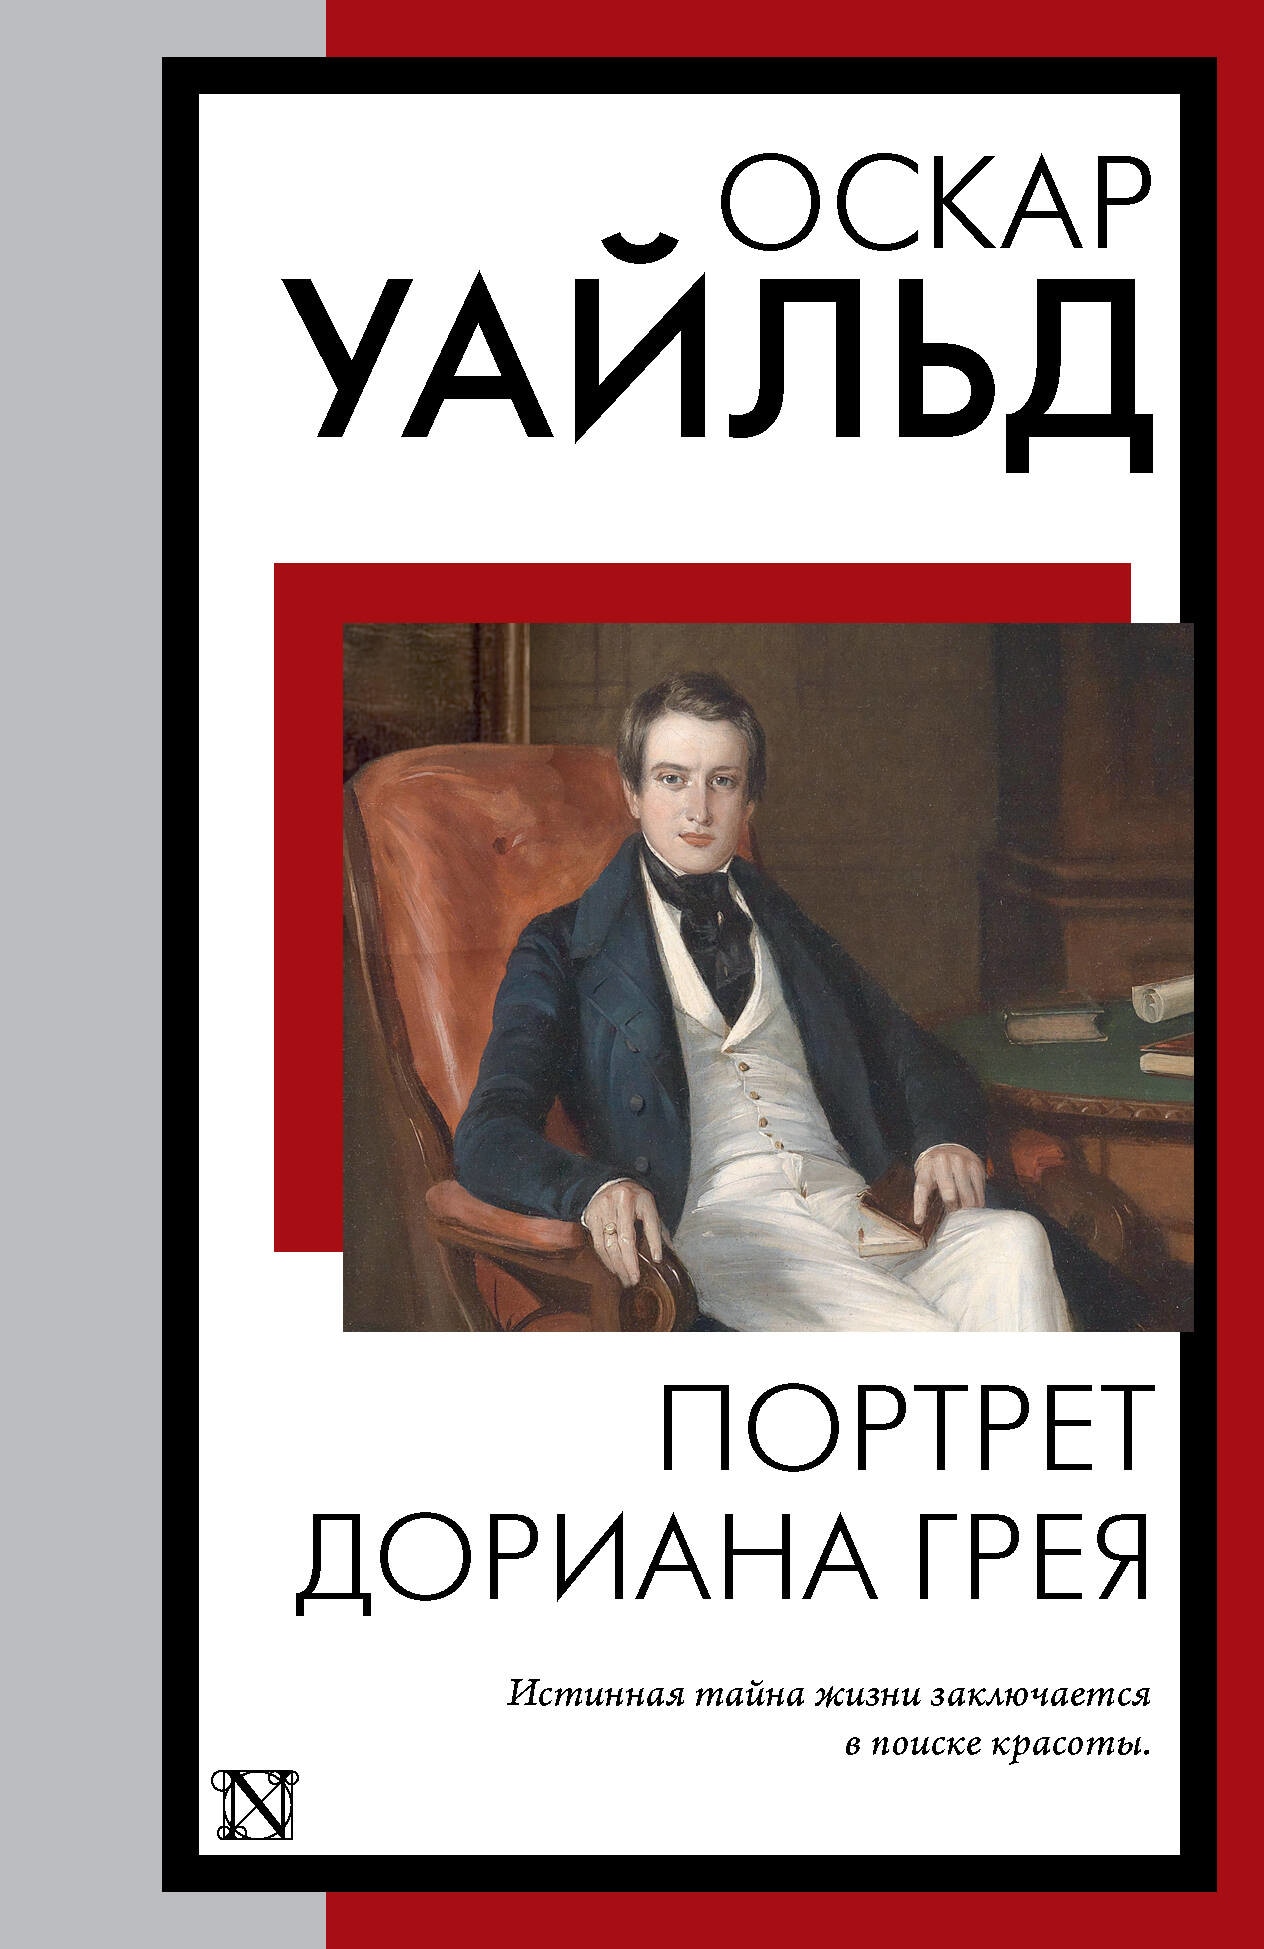 Book “Портрет Дориана Грея” by Оскар Уайльд — 2023